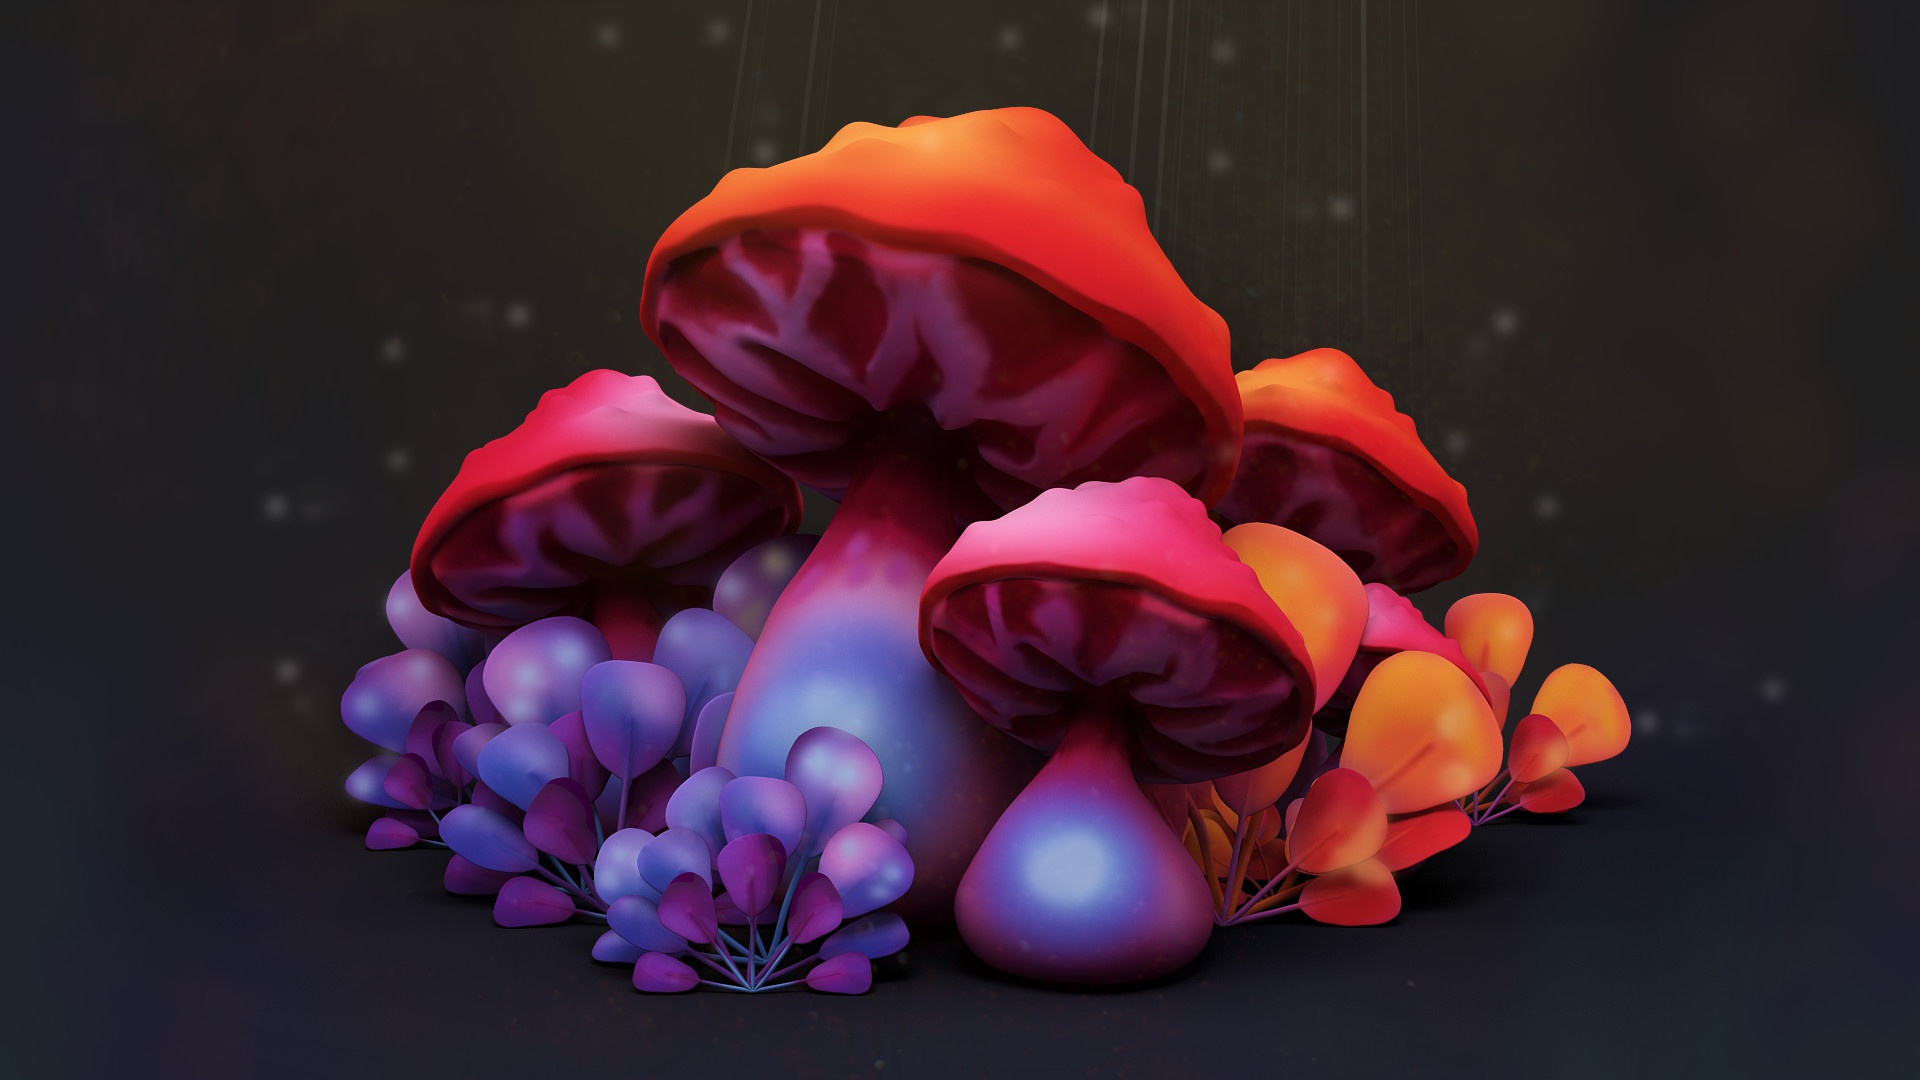 Digital Art Artwork Mushroom 1920x1080